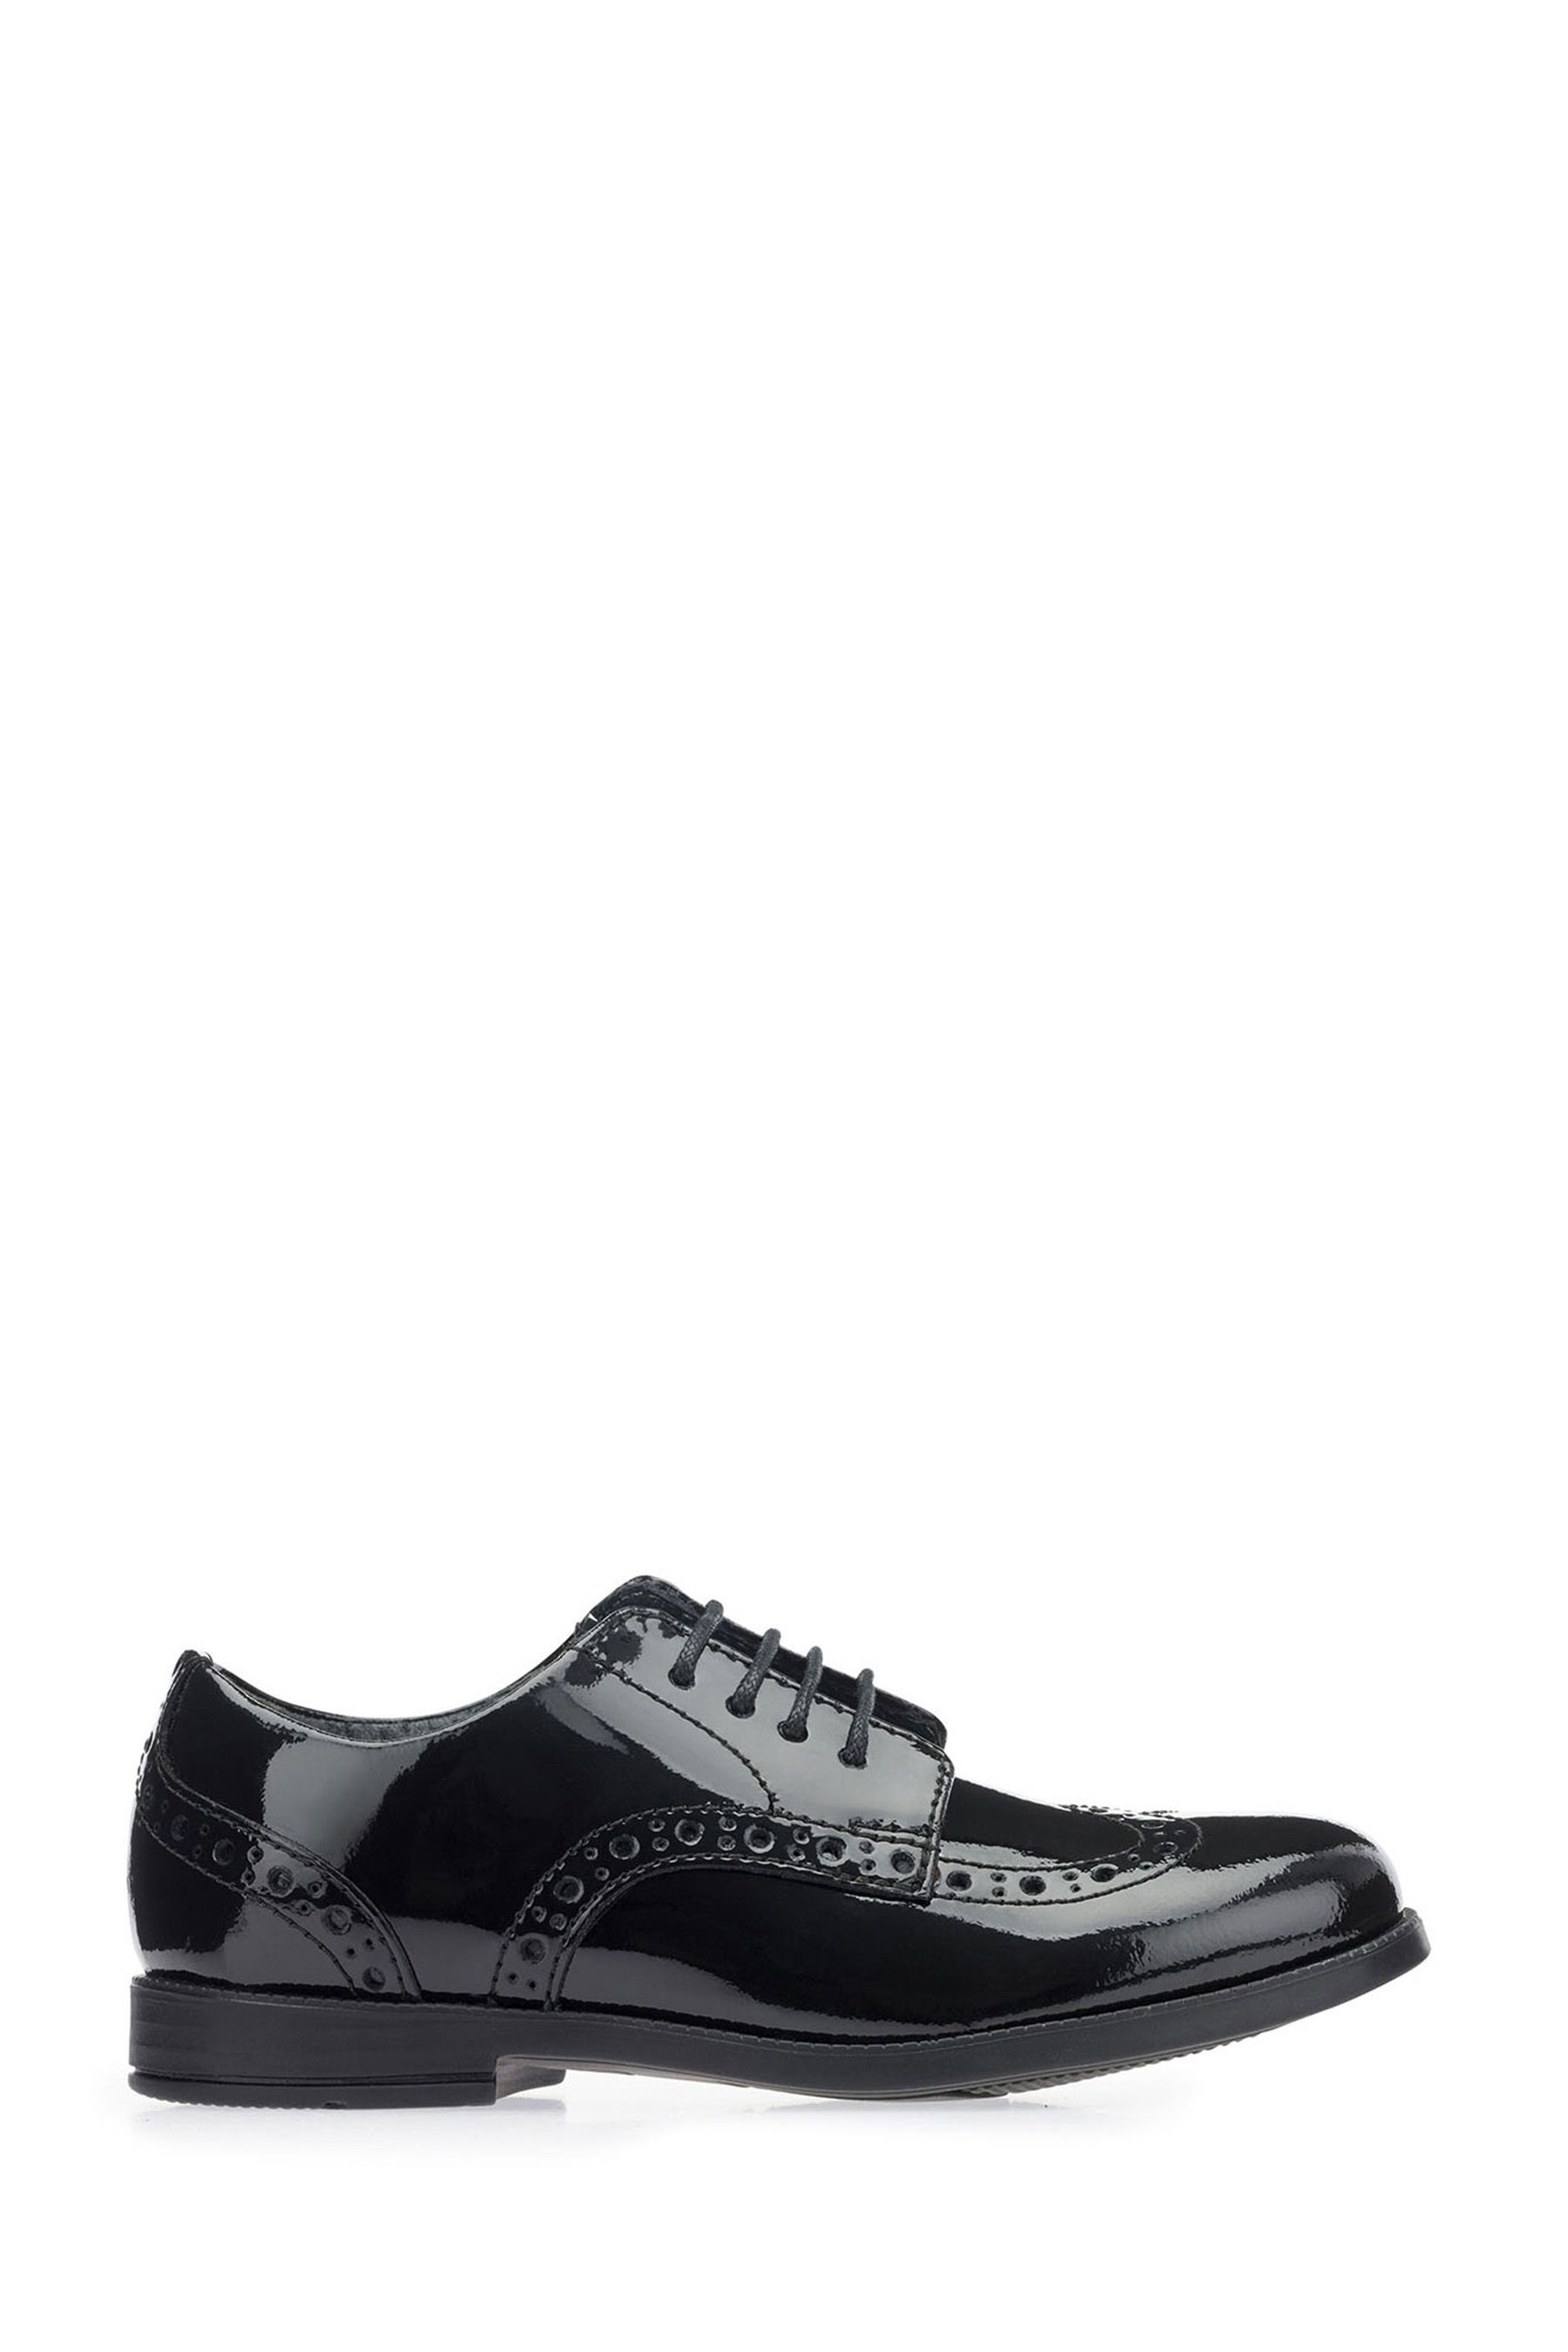 Start-Rite Pri Brogue Lace-up Black Patent Leather School Shoes